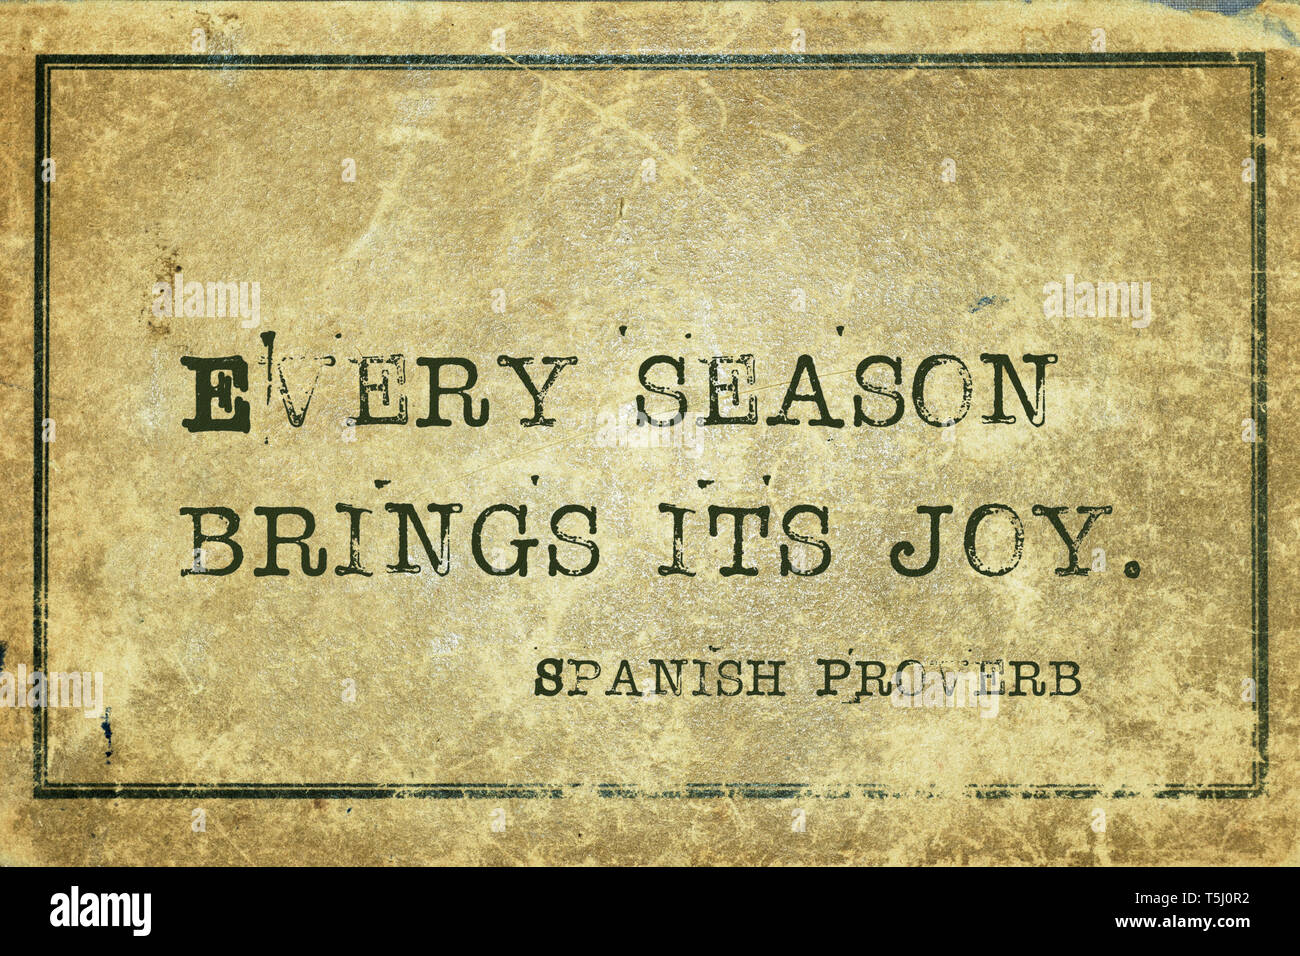 Every season brings its joy - ancient Spanish proverb printed on grunge vintage cardboard Stock Photo